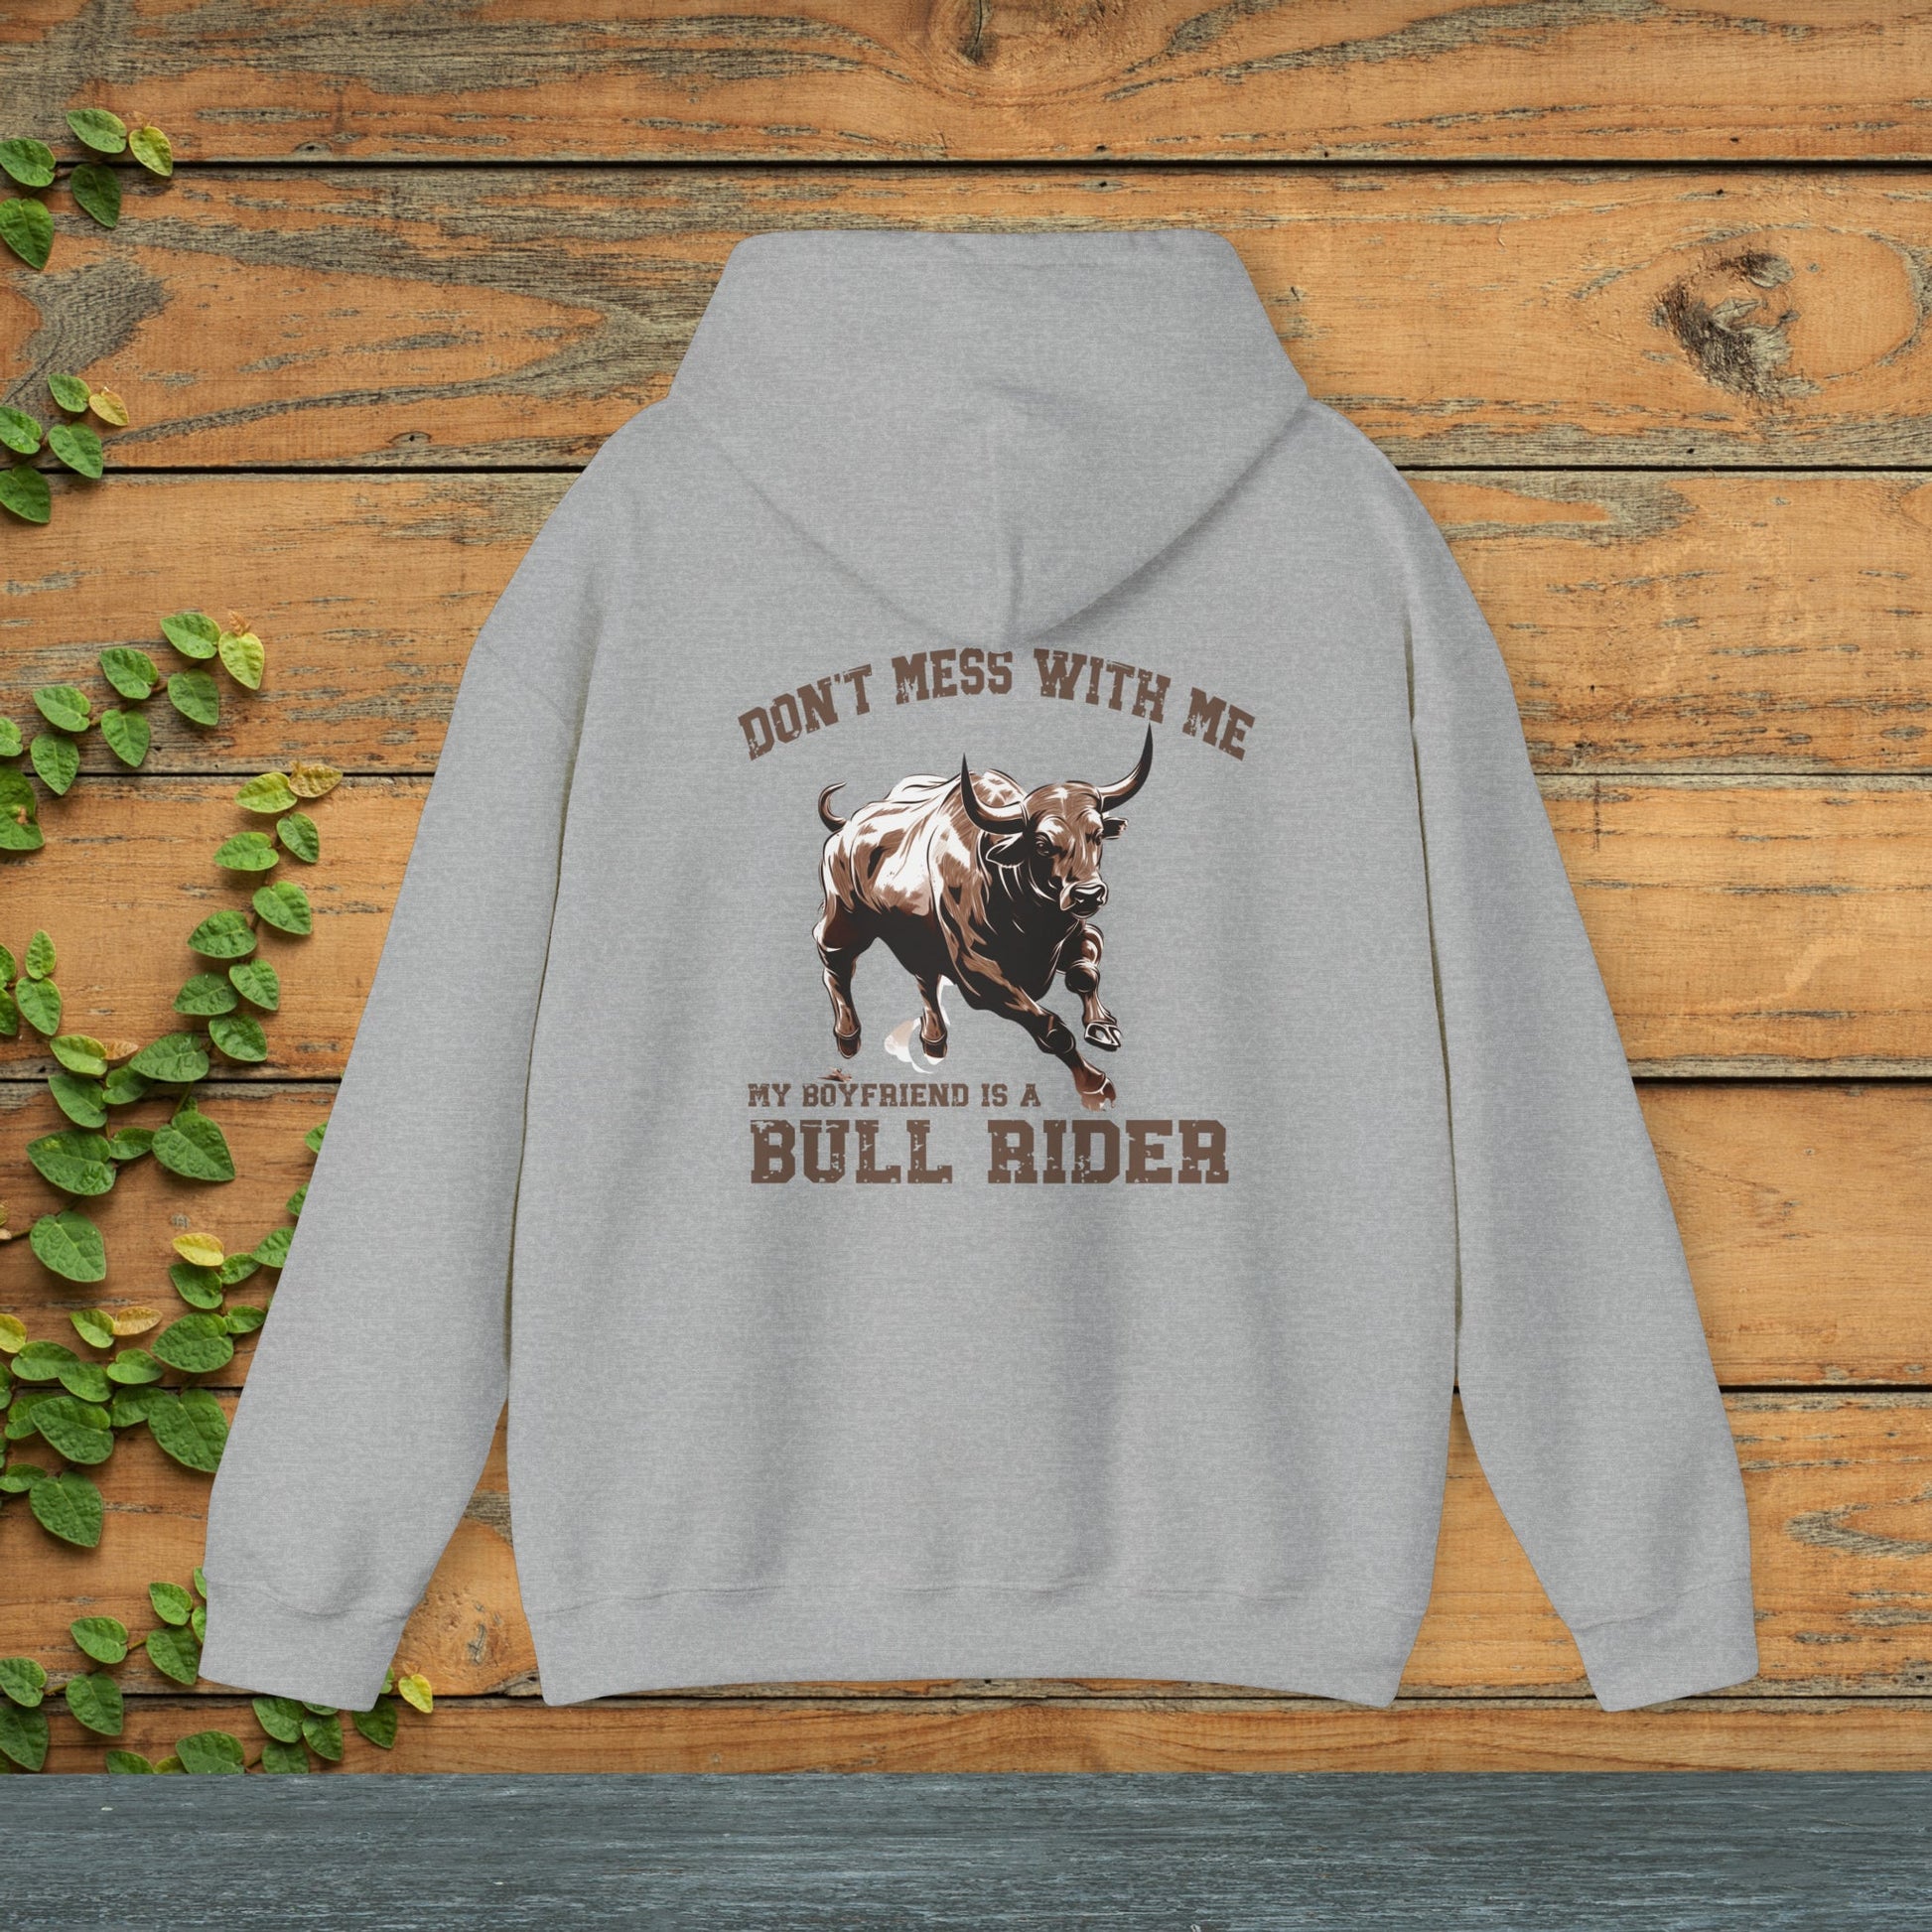 Rodeo Girlfriend Sweatshirt Hoodie, Girlfriend of a Cowboy Bull Rider, Don't Mess Me Sweatshirt Hoodie, Tough Chic Western Rodeo Shirt - FlooredByArt